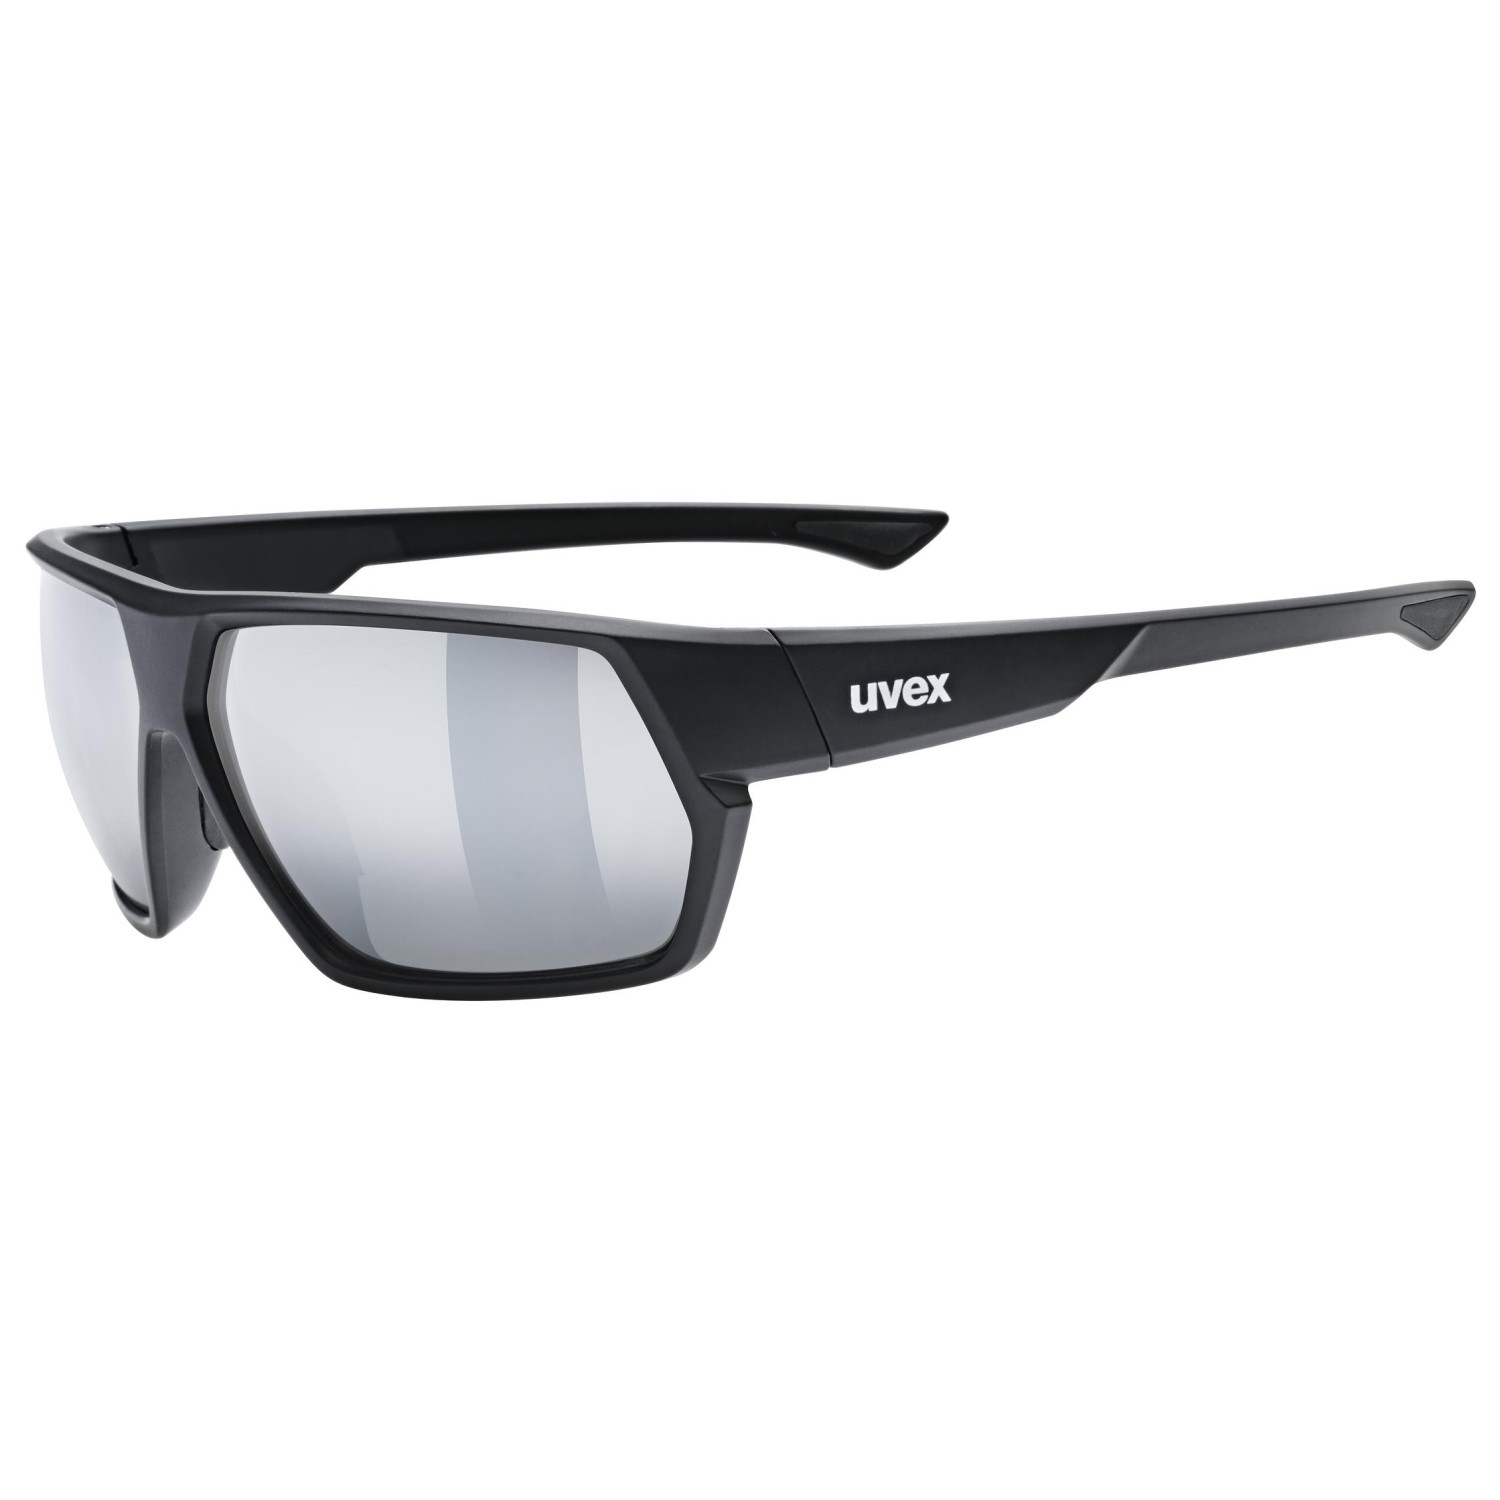 Солнцезащитные очки Uvex Sportstyle 238 Mirror Cat 3, цвет Black Mat солнцезащитные очки uvex lgl 39 mirror cat 3 цвет grey mat blue